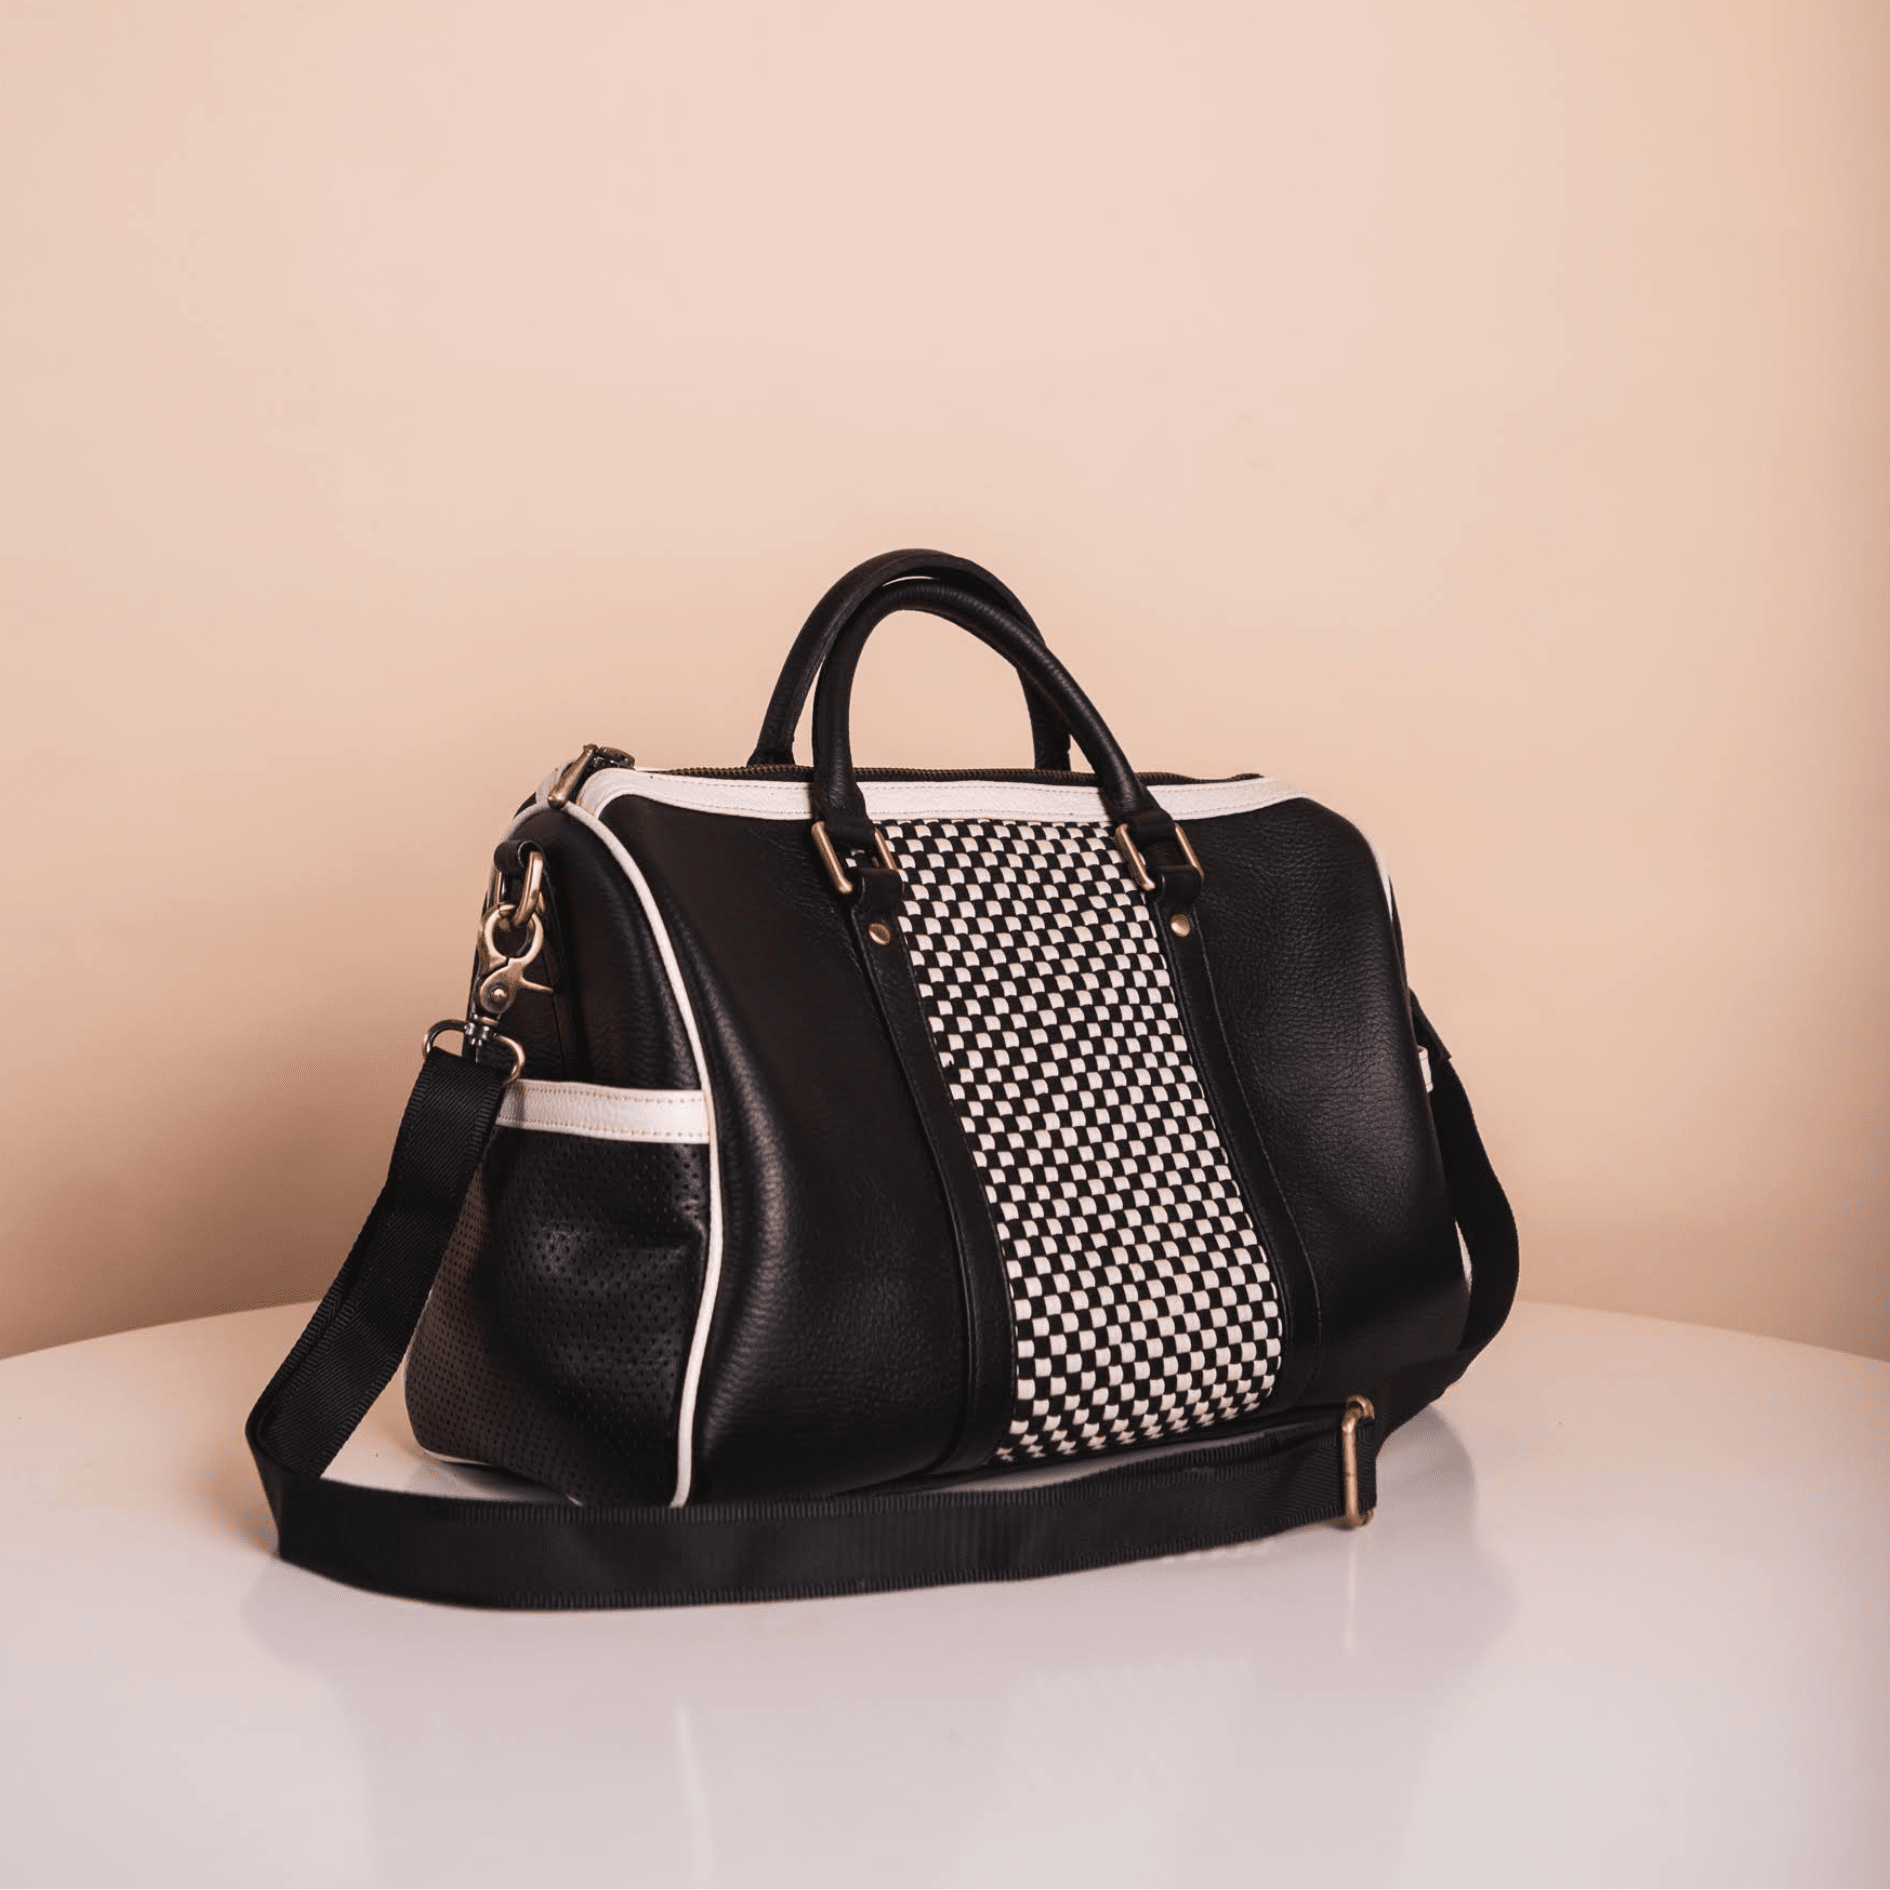 The Platinum Travel Boston Bag in Black R2R